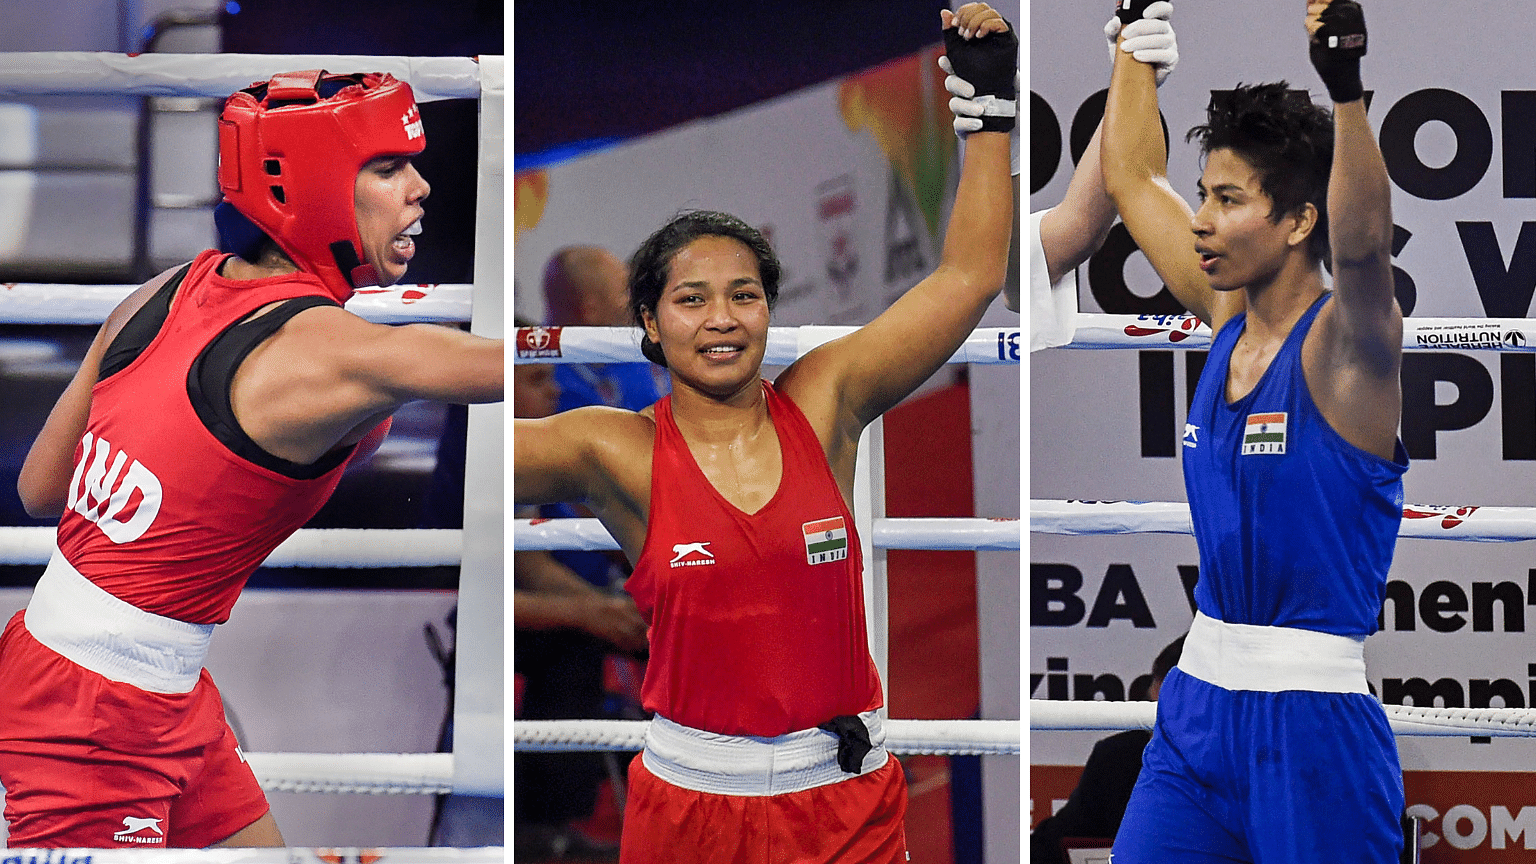 From left:  Manisha Moun, Kachari Bhagyabati and Lovlina Borgohain in action at the AIBA Women’s World Boxing Championship on Day 4 in New Delhi.